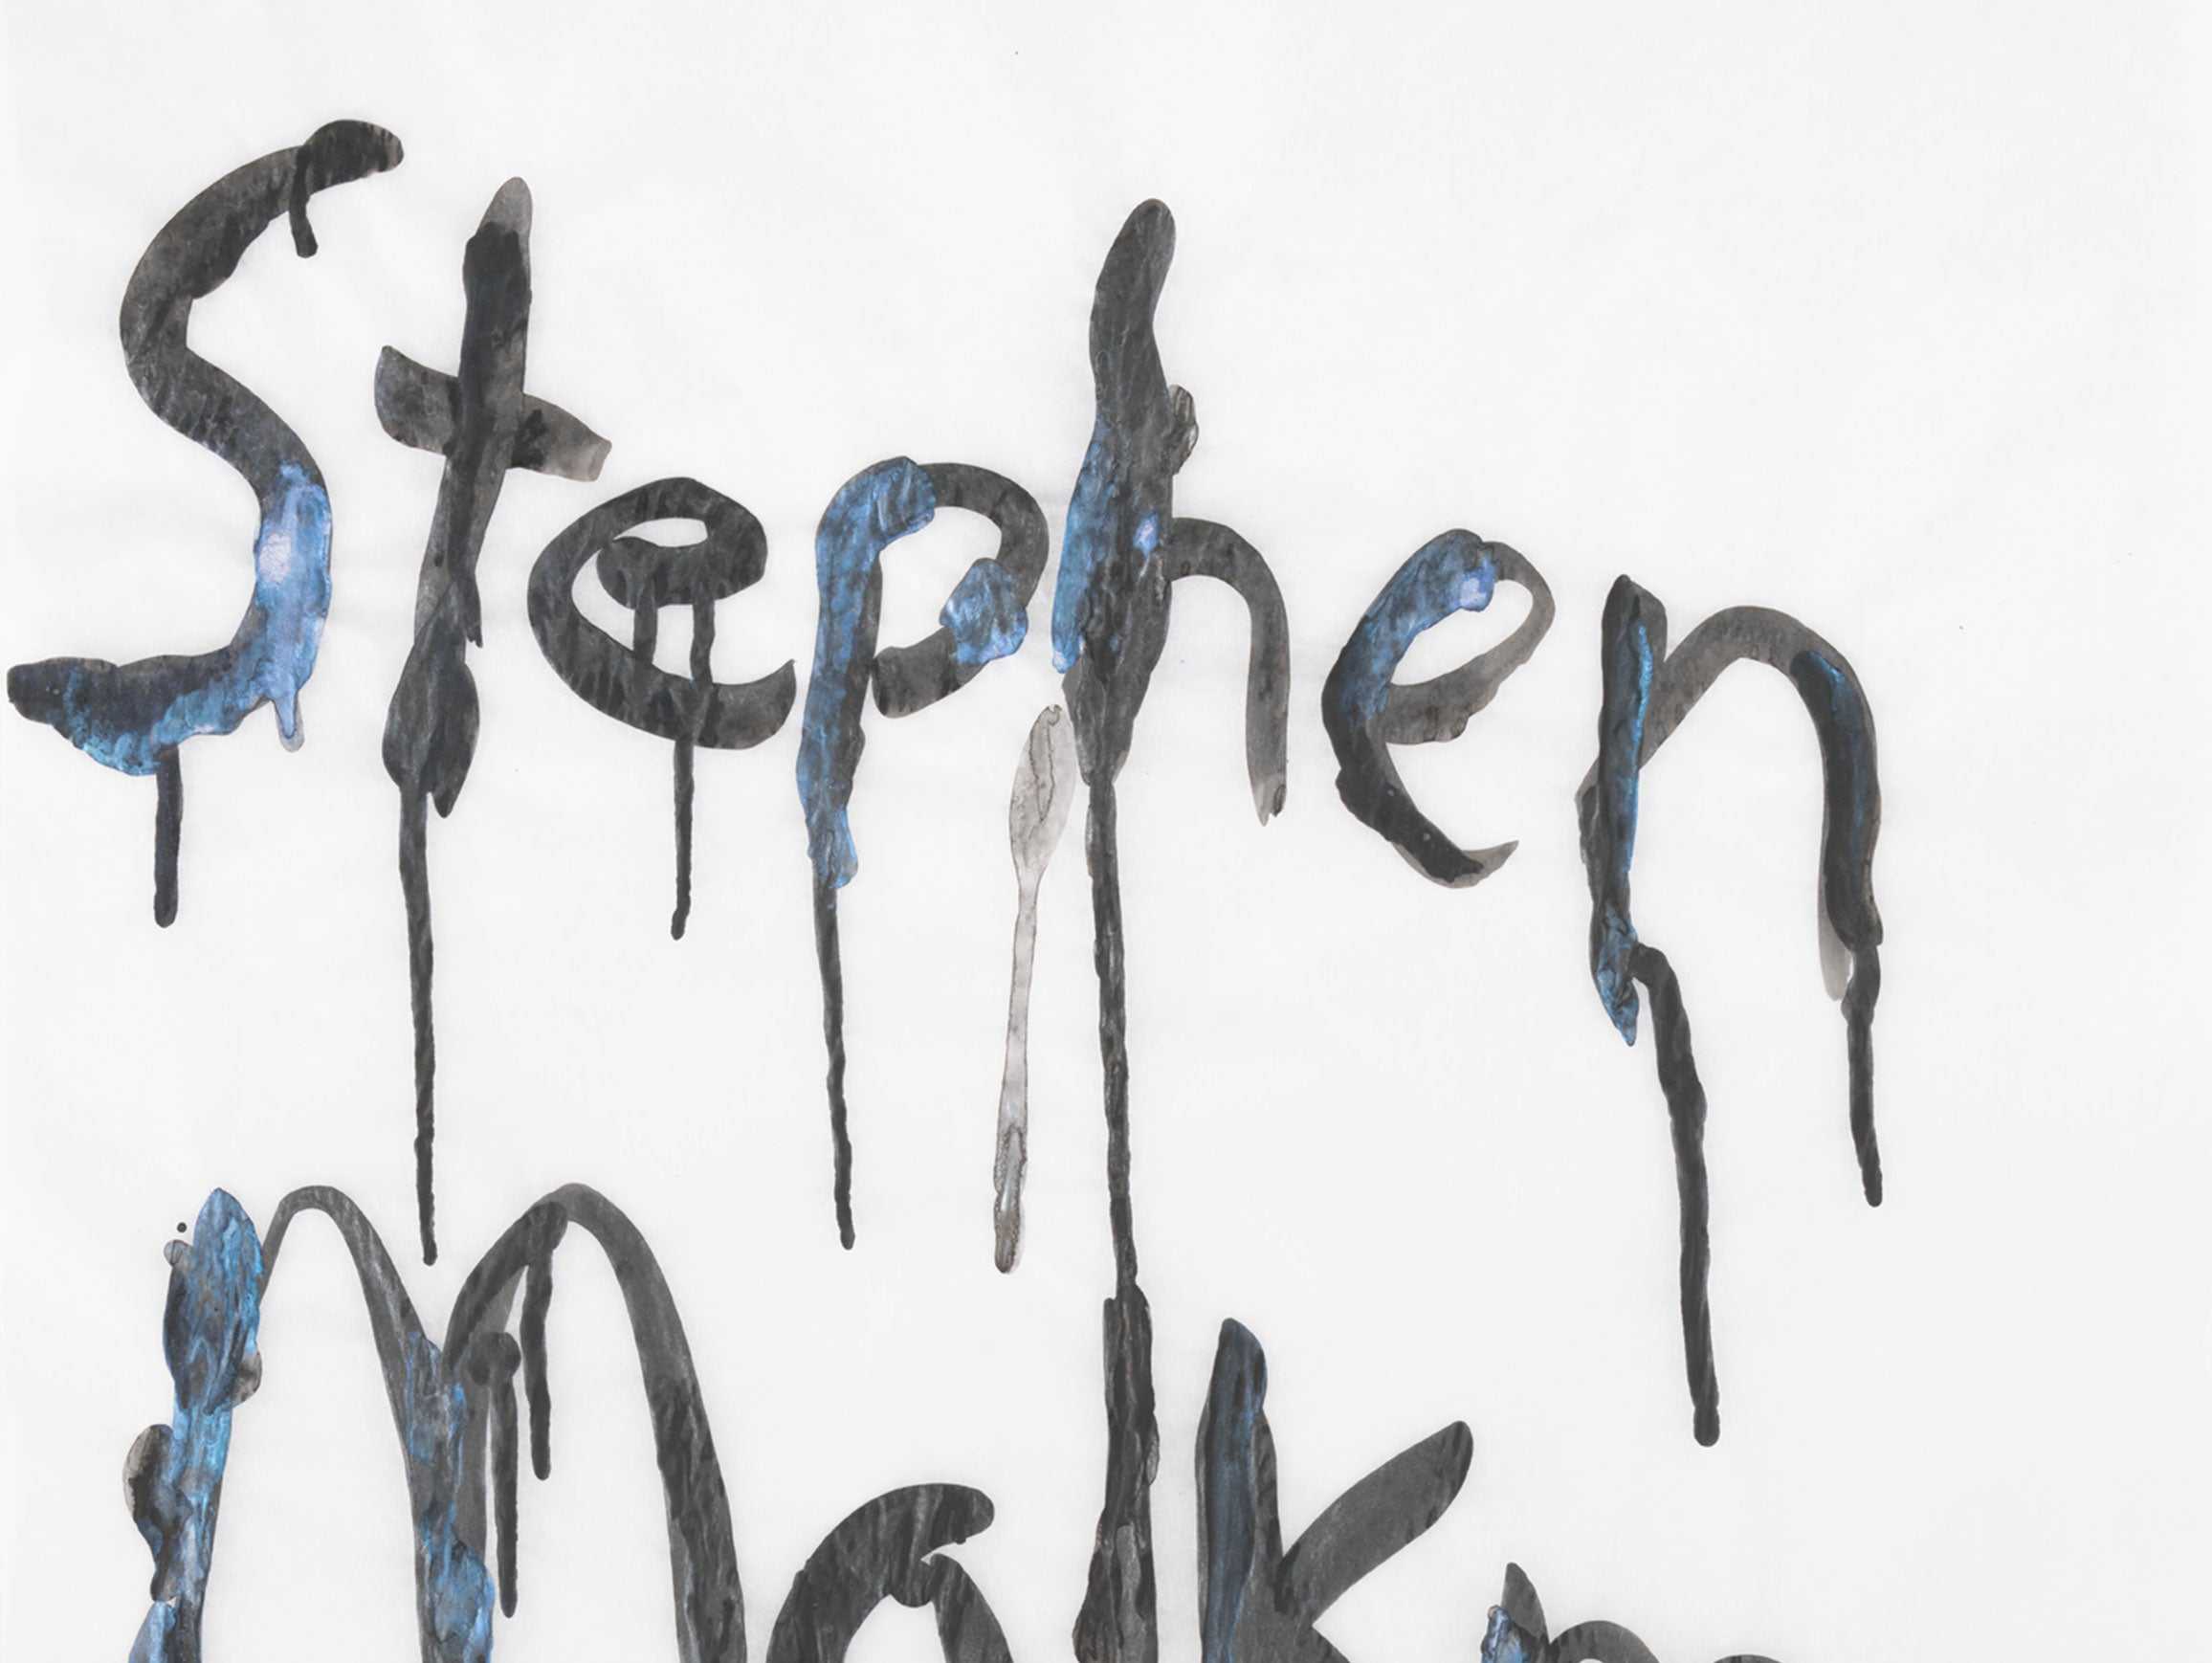 Kim Gordon: Stephen Malkmus